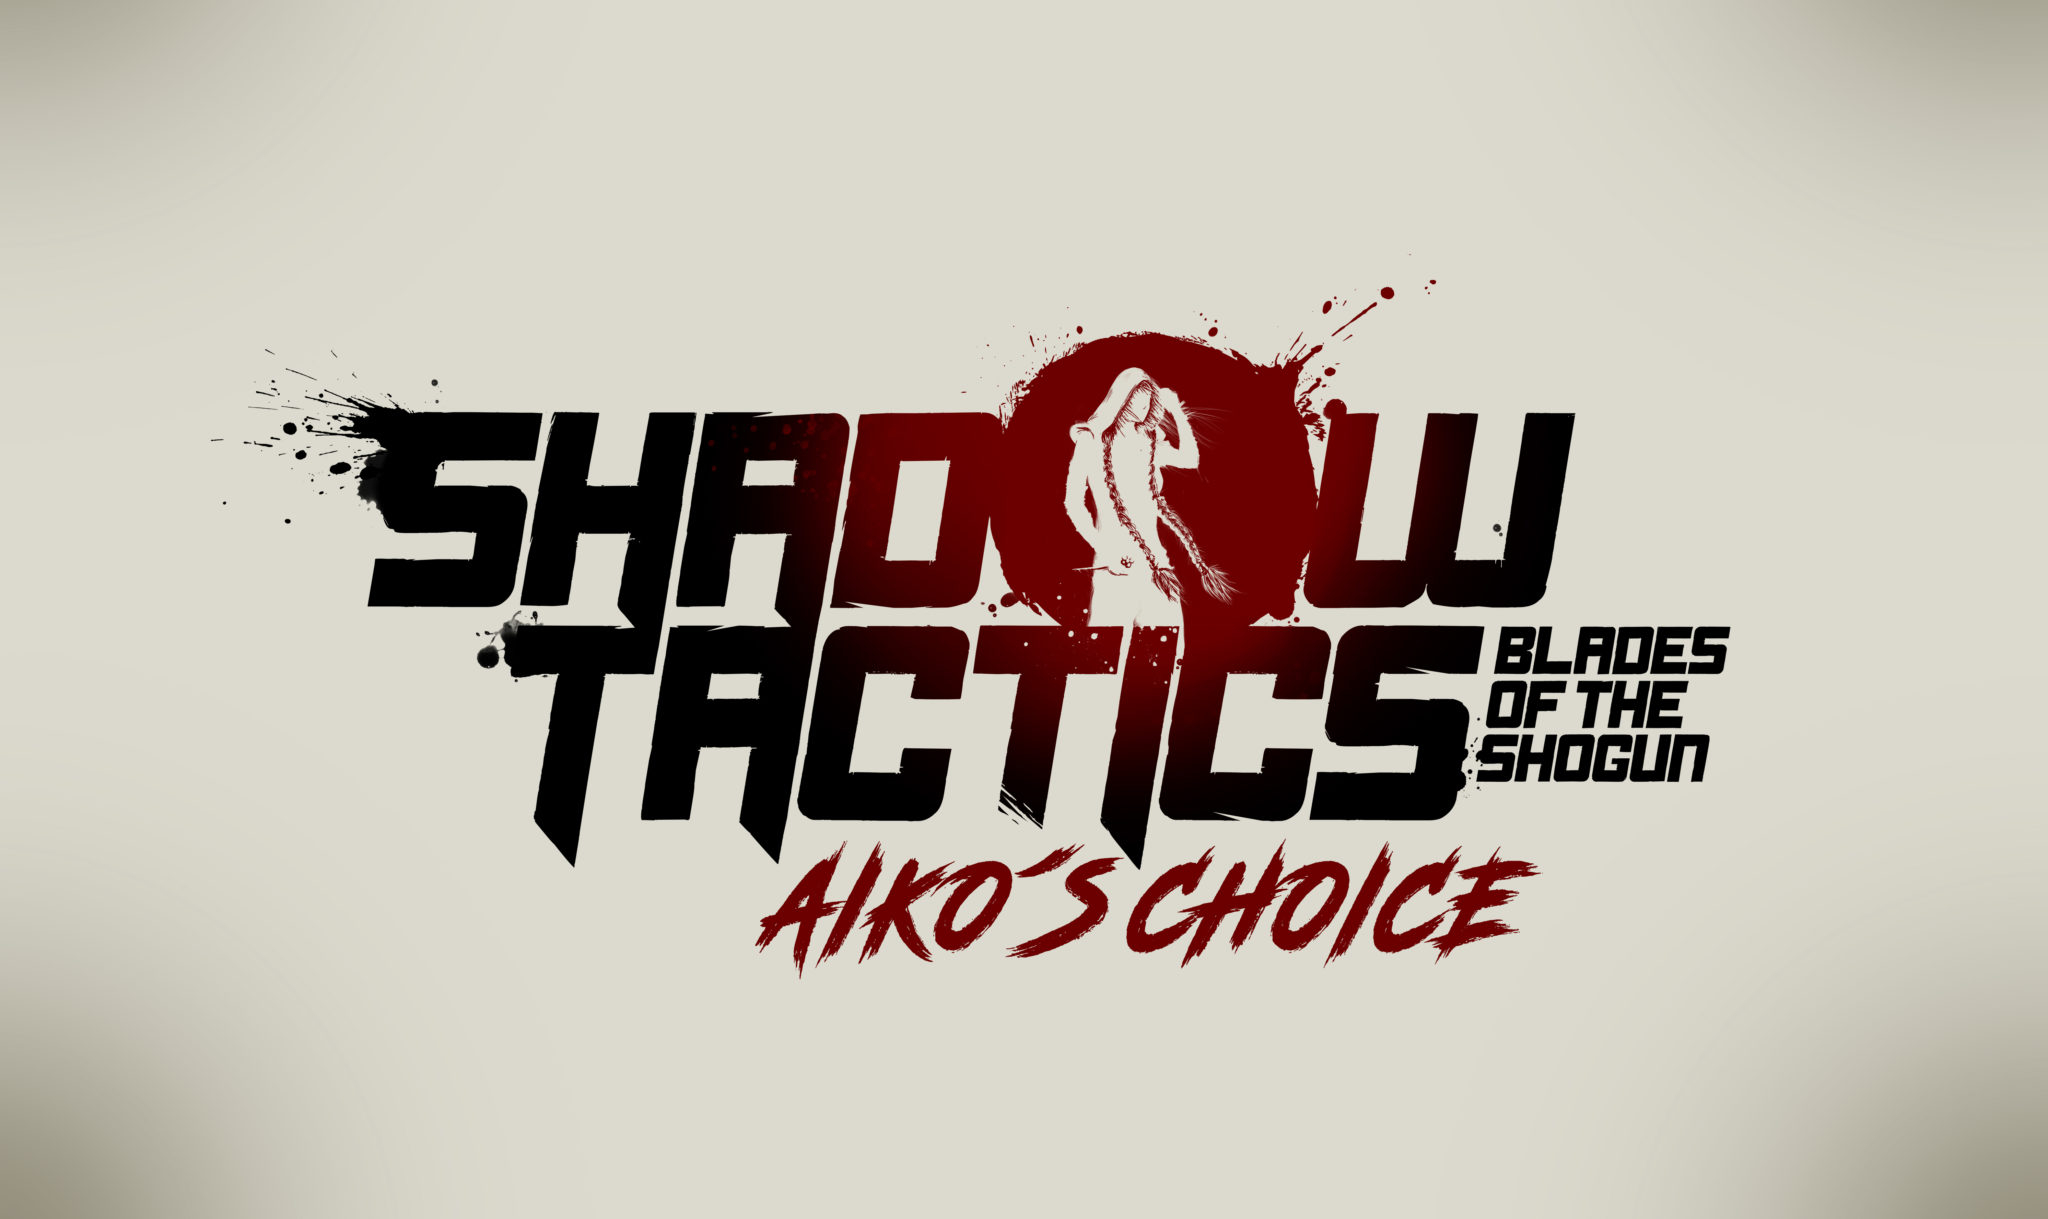   Aikos Choice  Shadow Tactics: Blades of the Shogun       